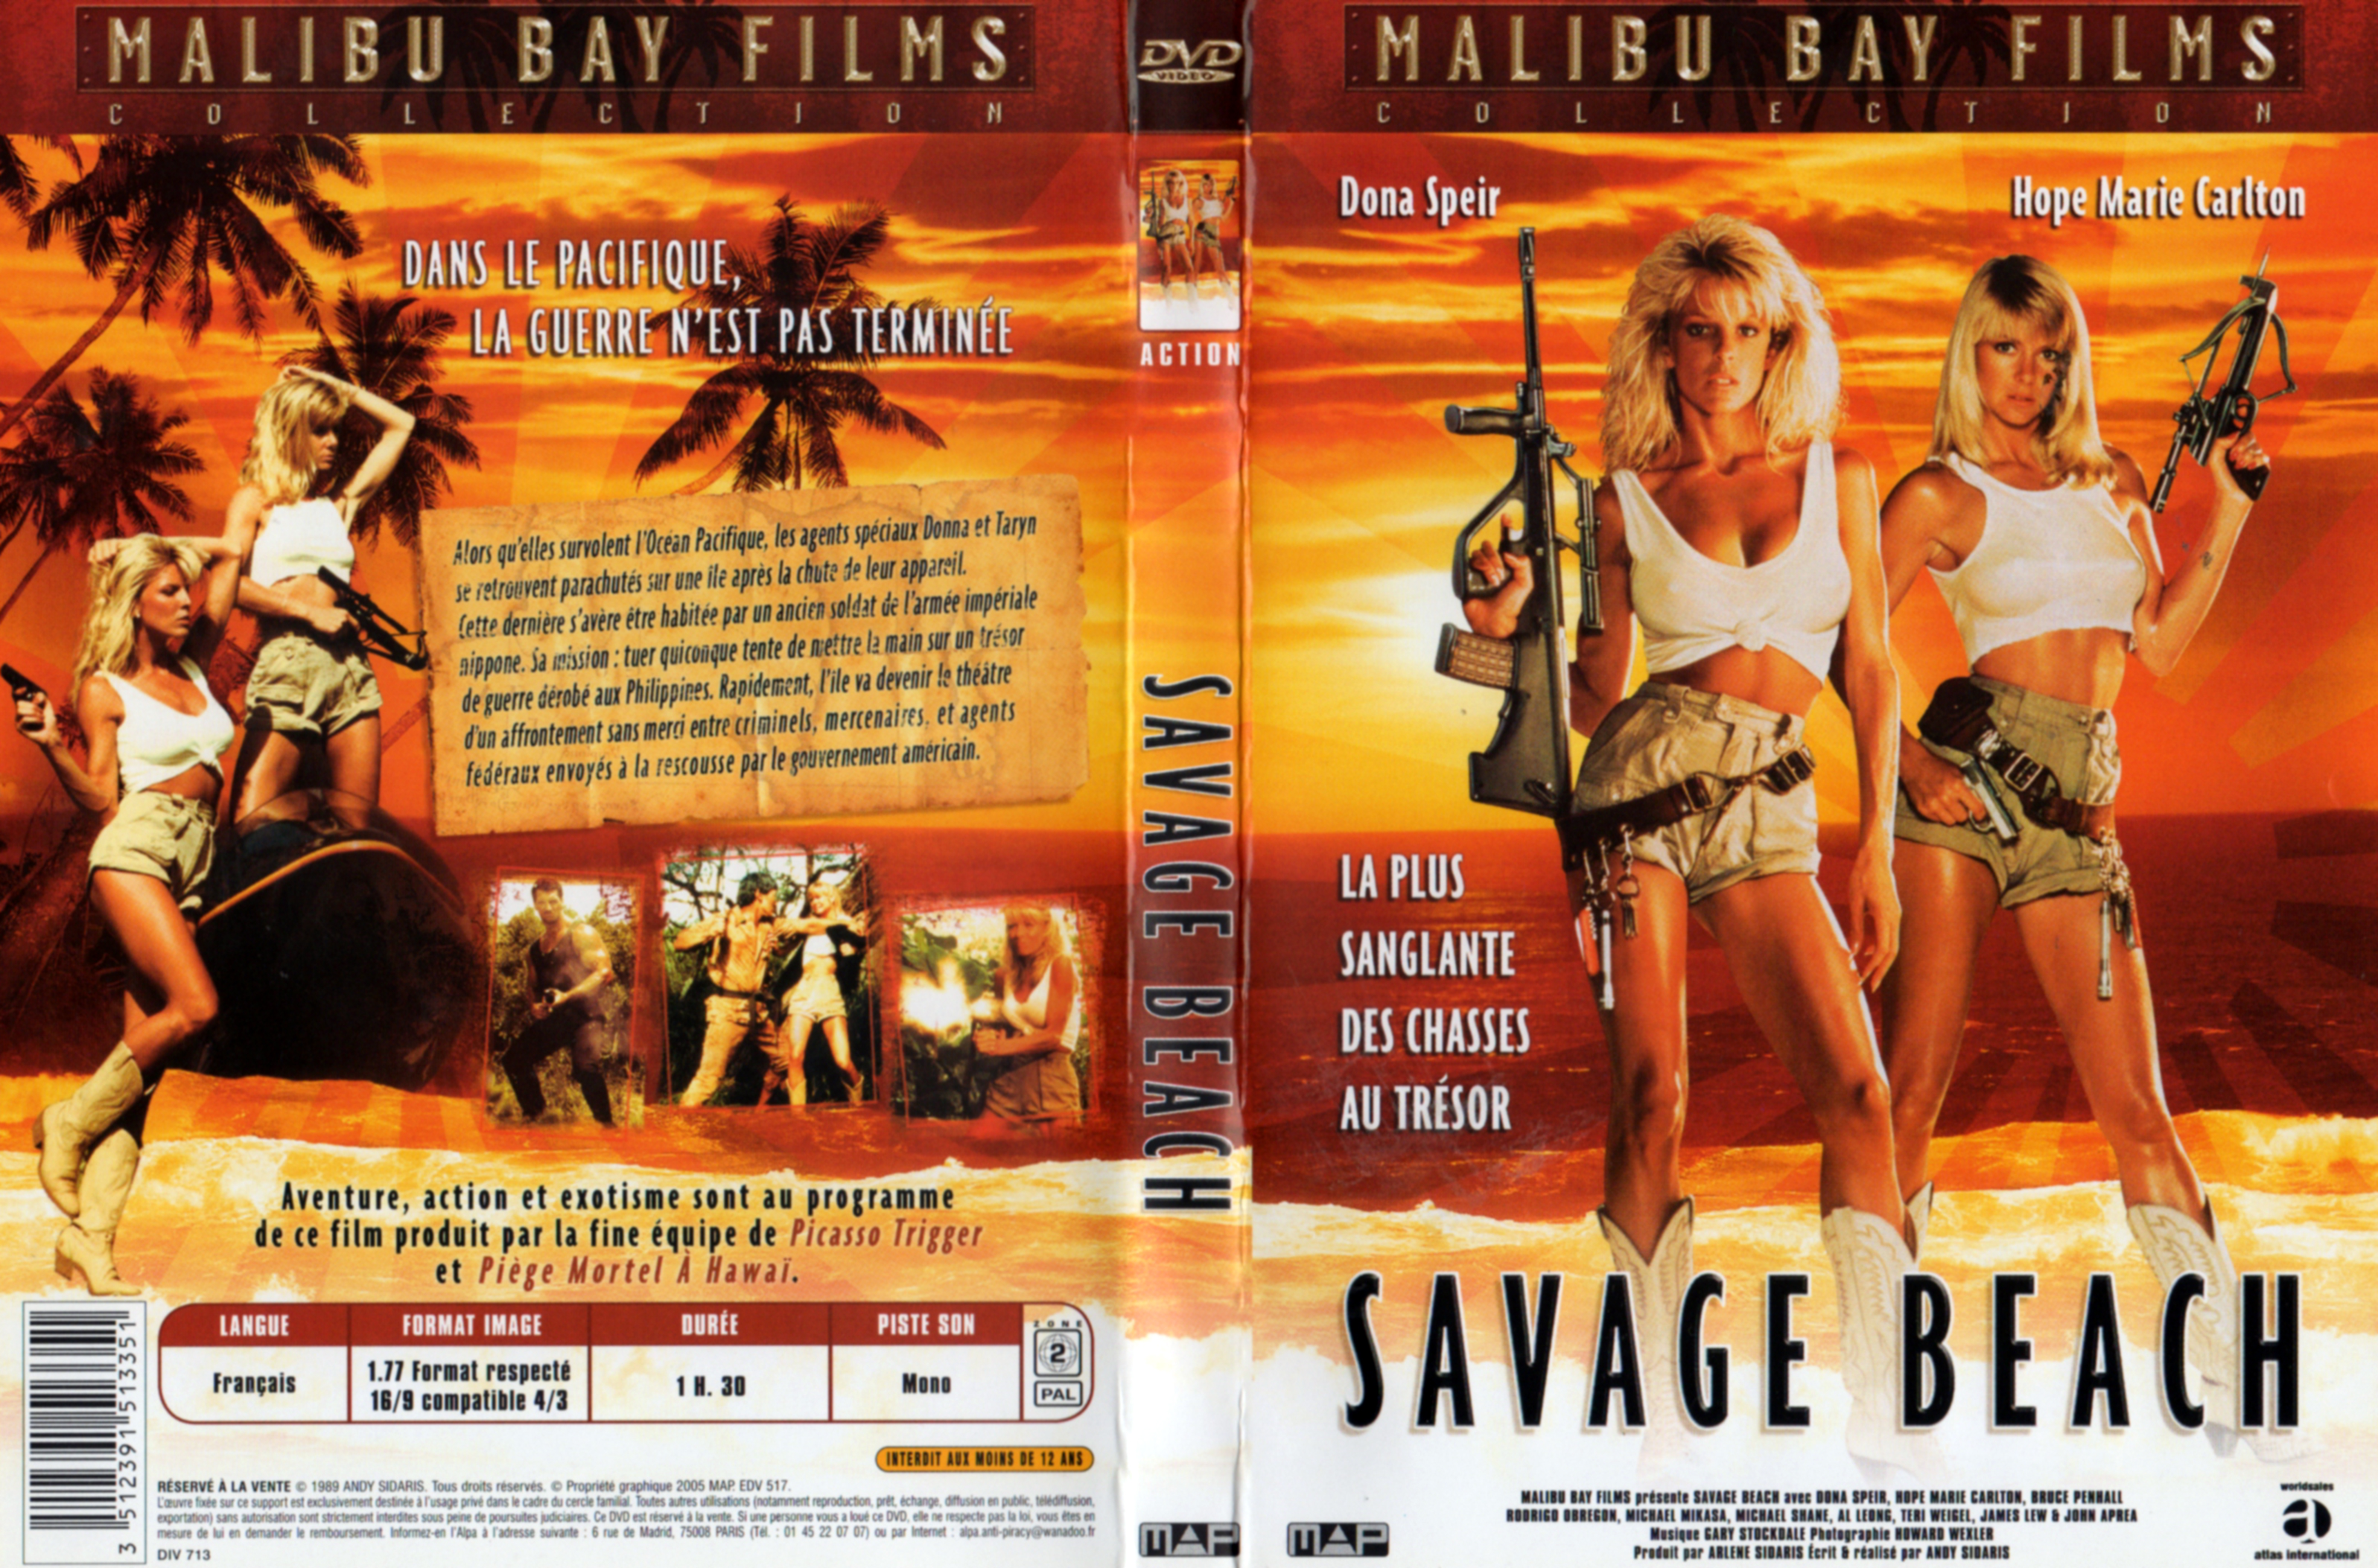 Return to savage beach cast